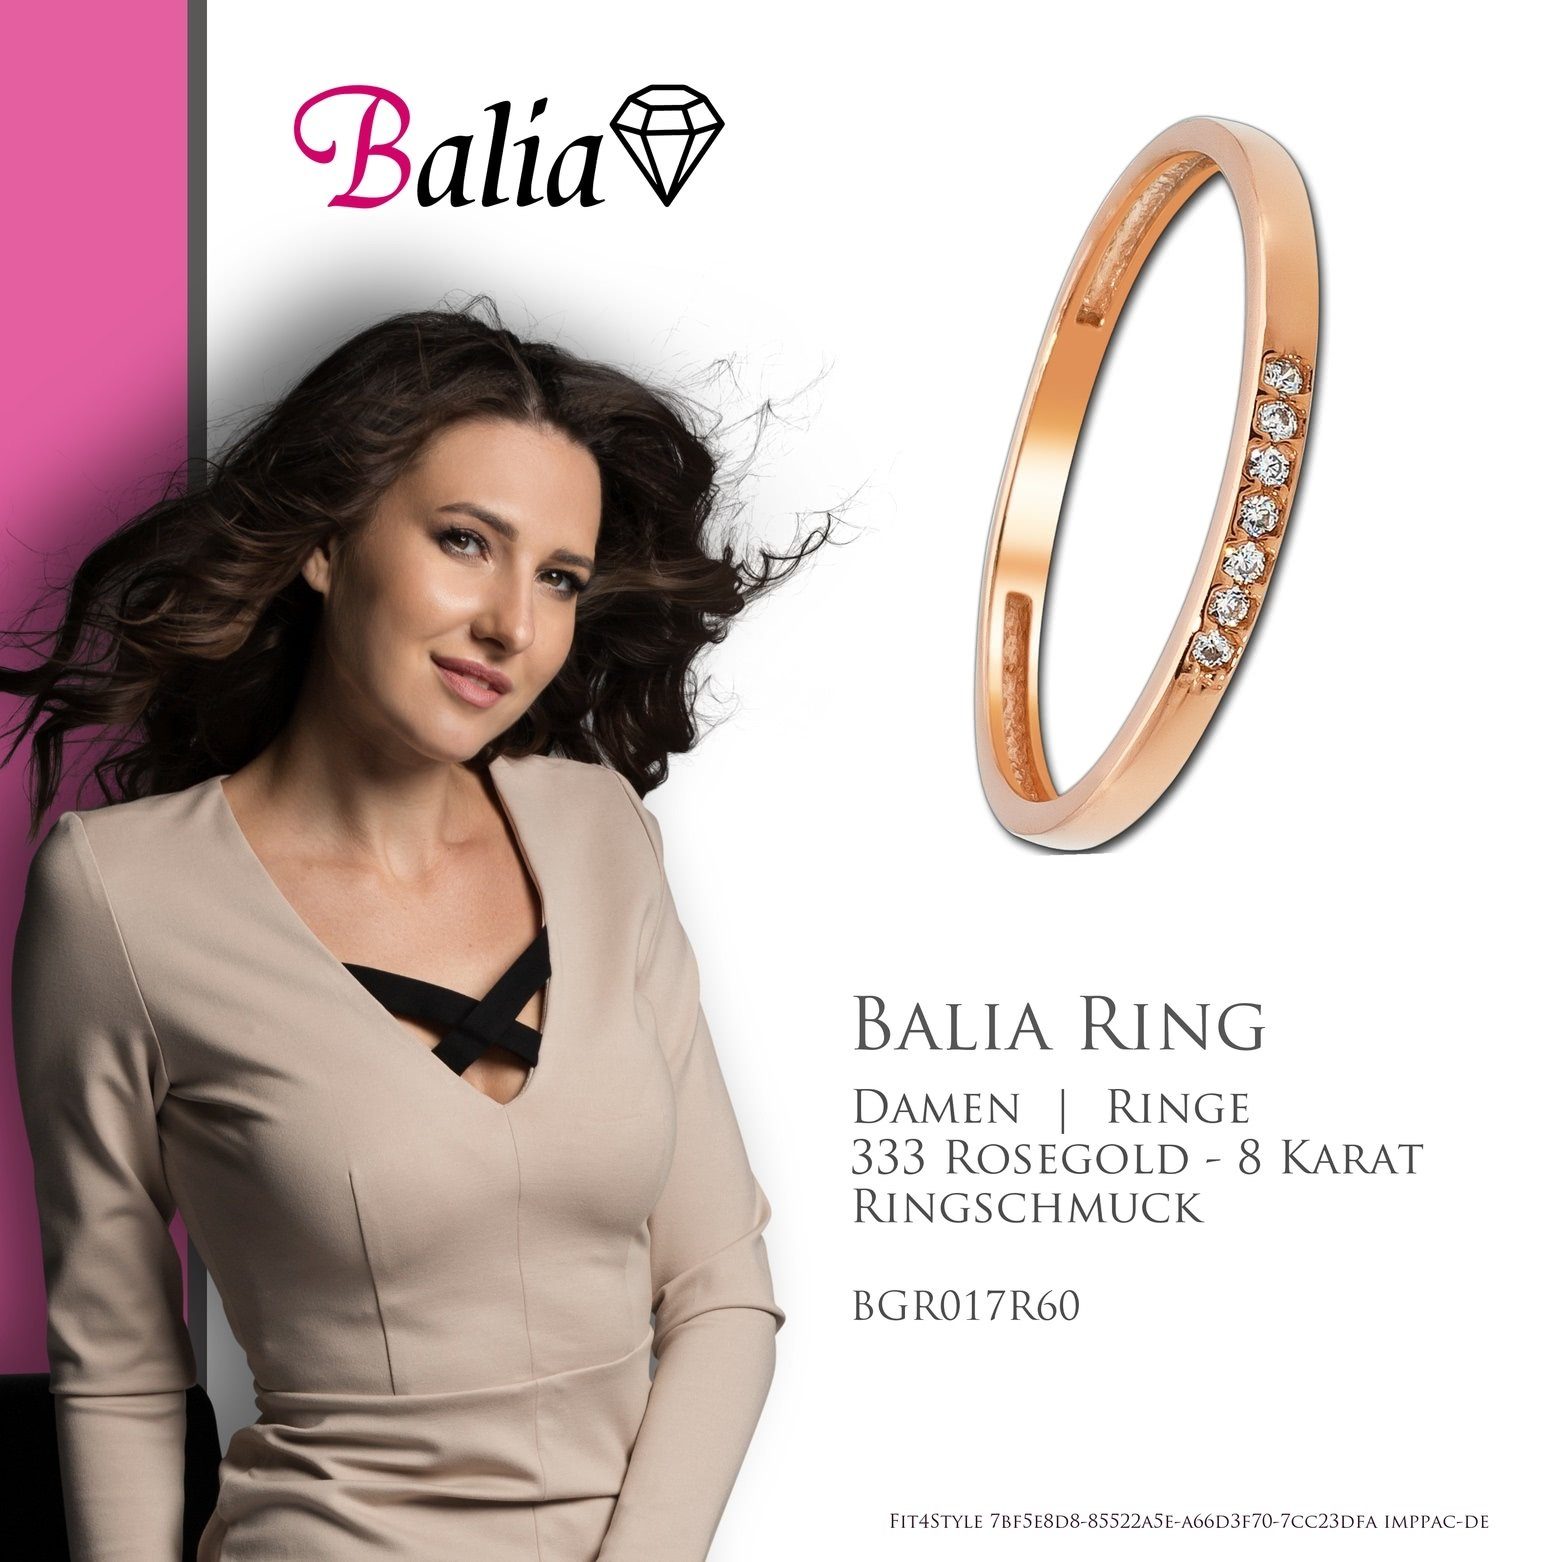 60 8 Ring Ringe, Karat (19,1) Damen Goldring (Fingerring), Blatt - Balia 7 Gold Rosegold 8Kt Gr.60 Damen Zirkonias, 333 Balia